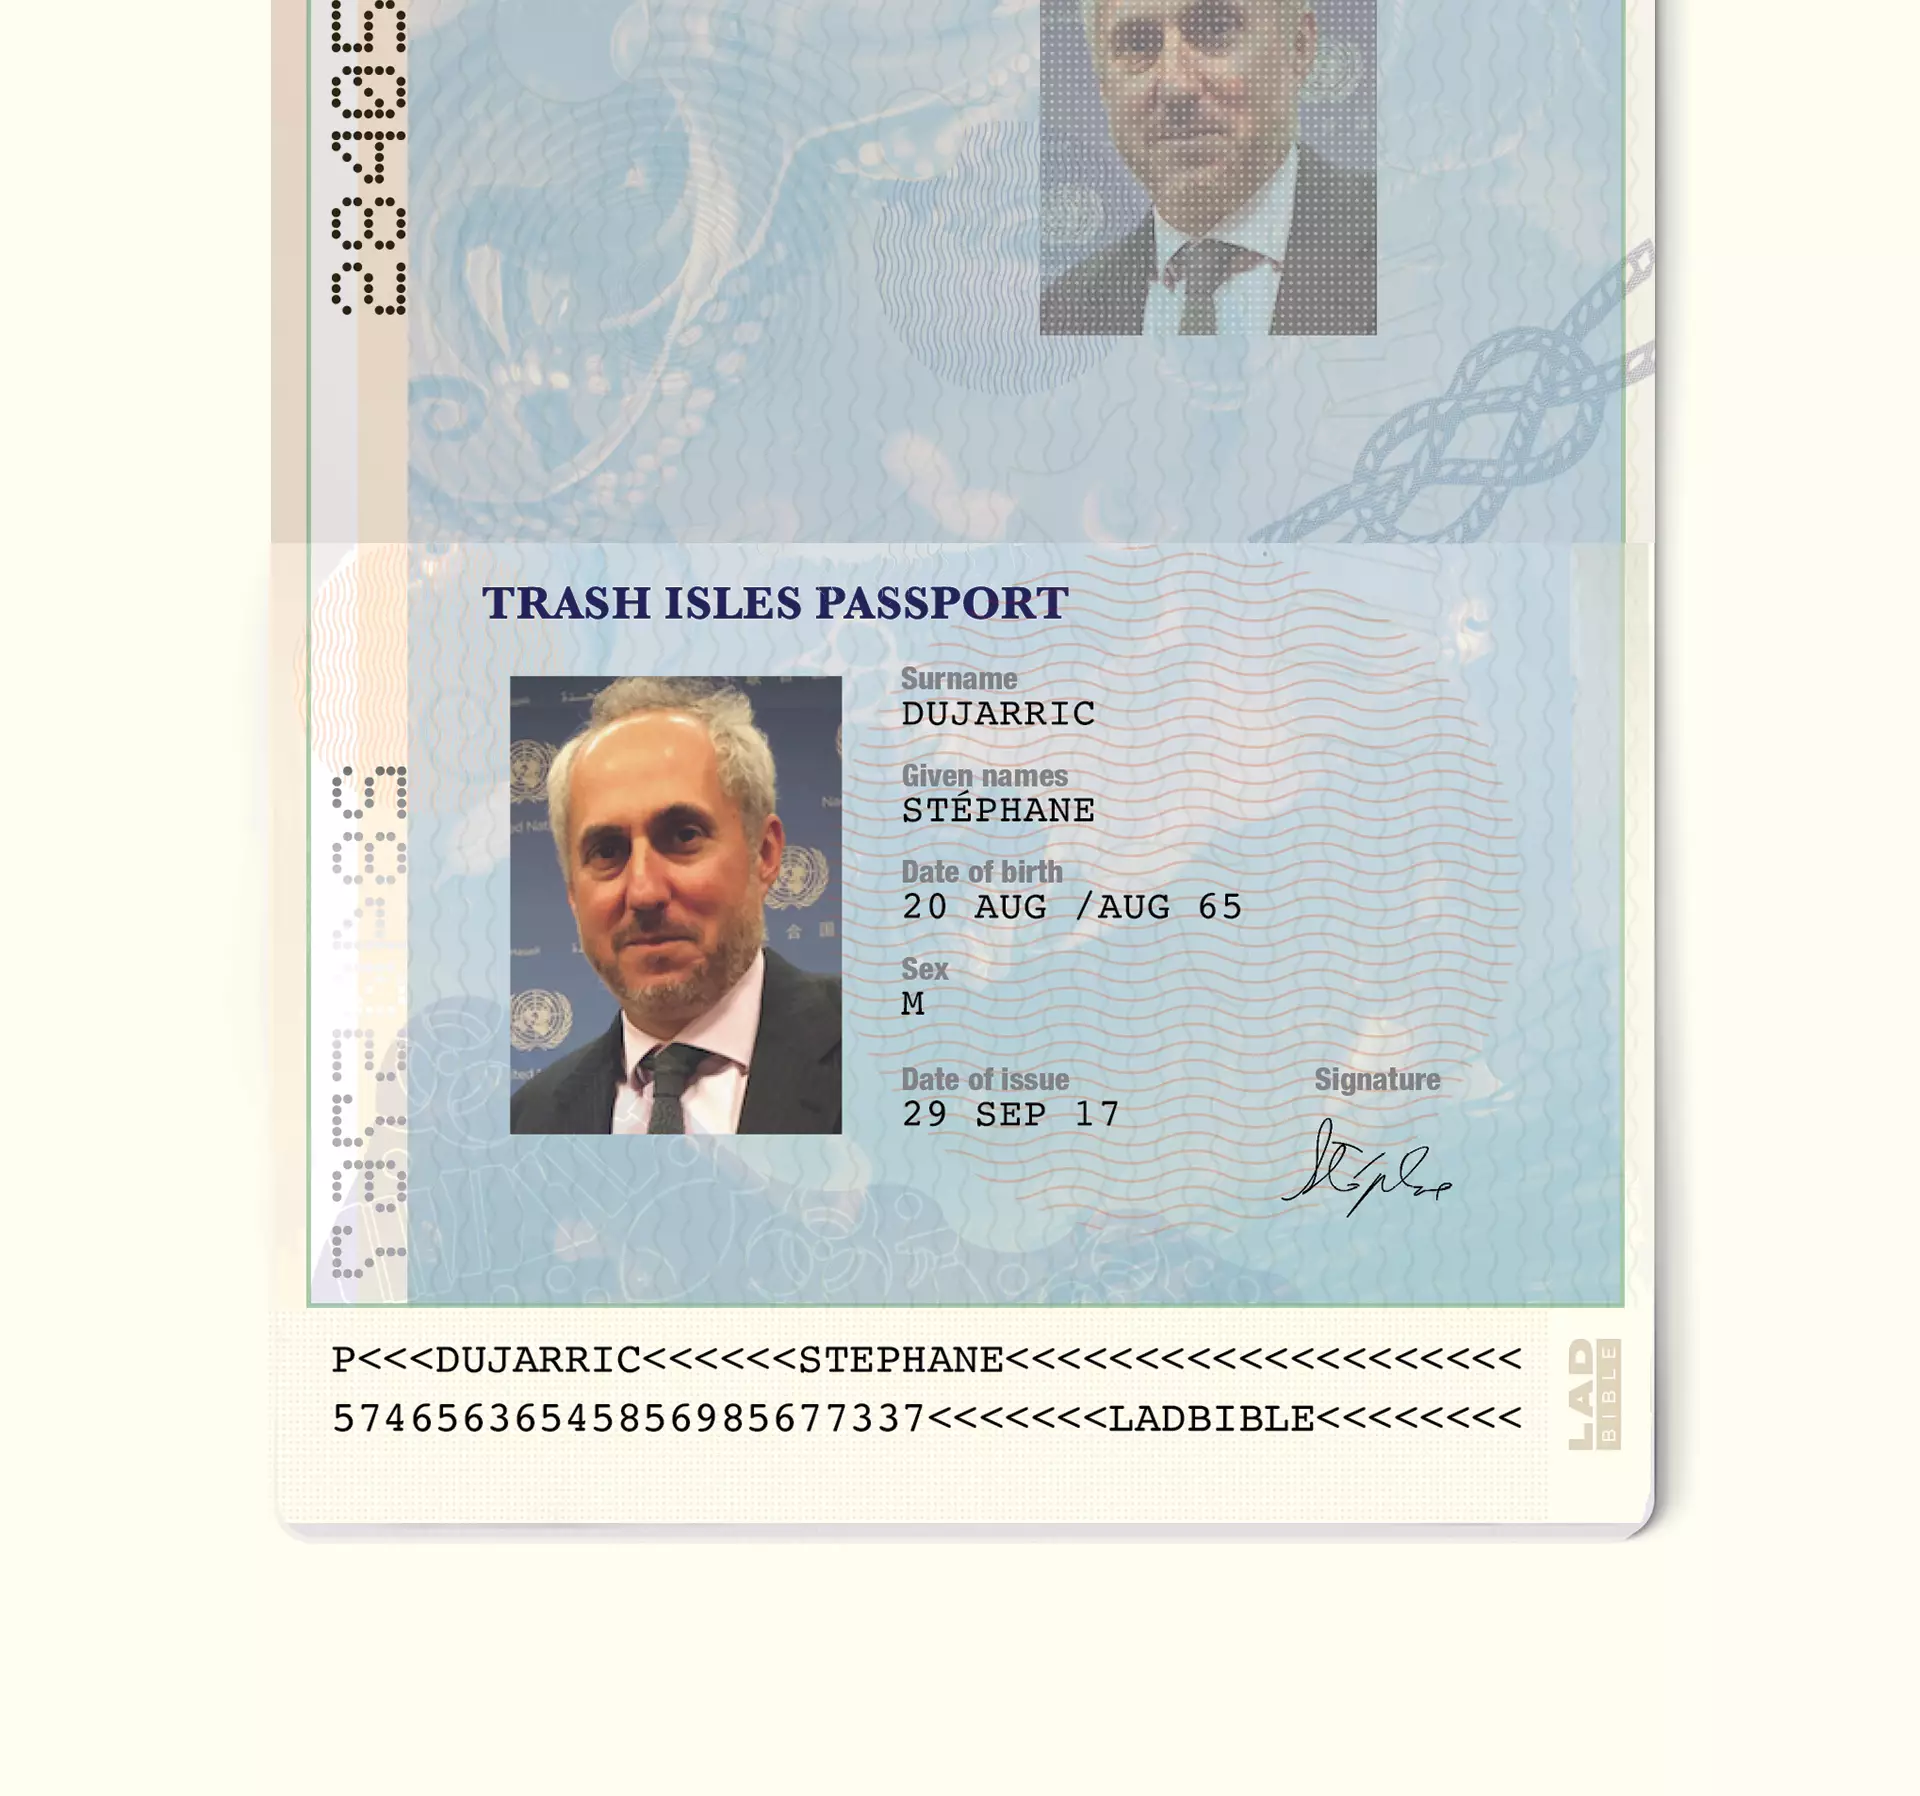 Trash Isles passport